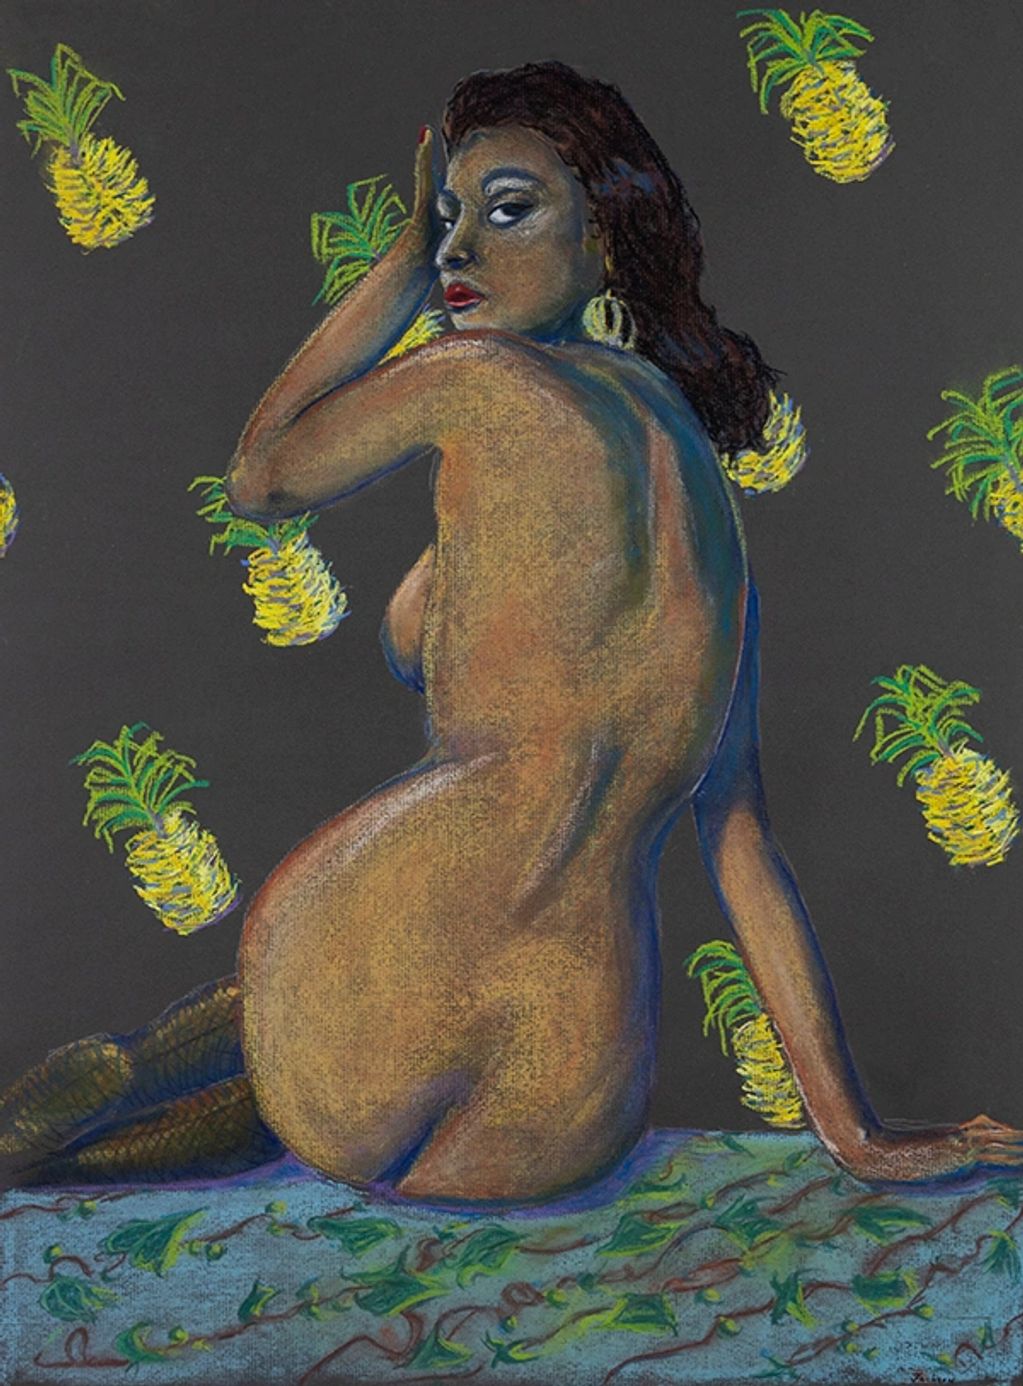 pinup, sexy, erotic, pineapple wallpaper, vibrant color, Latina